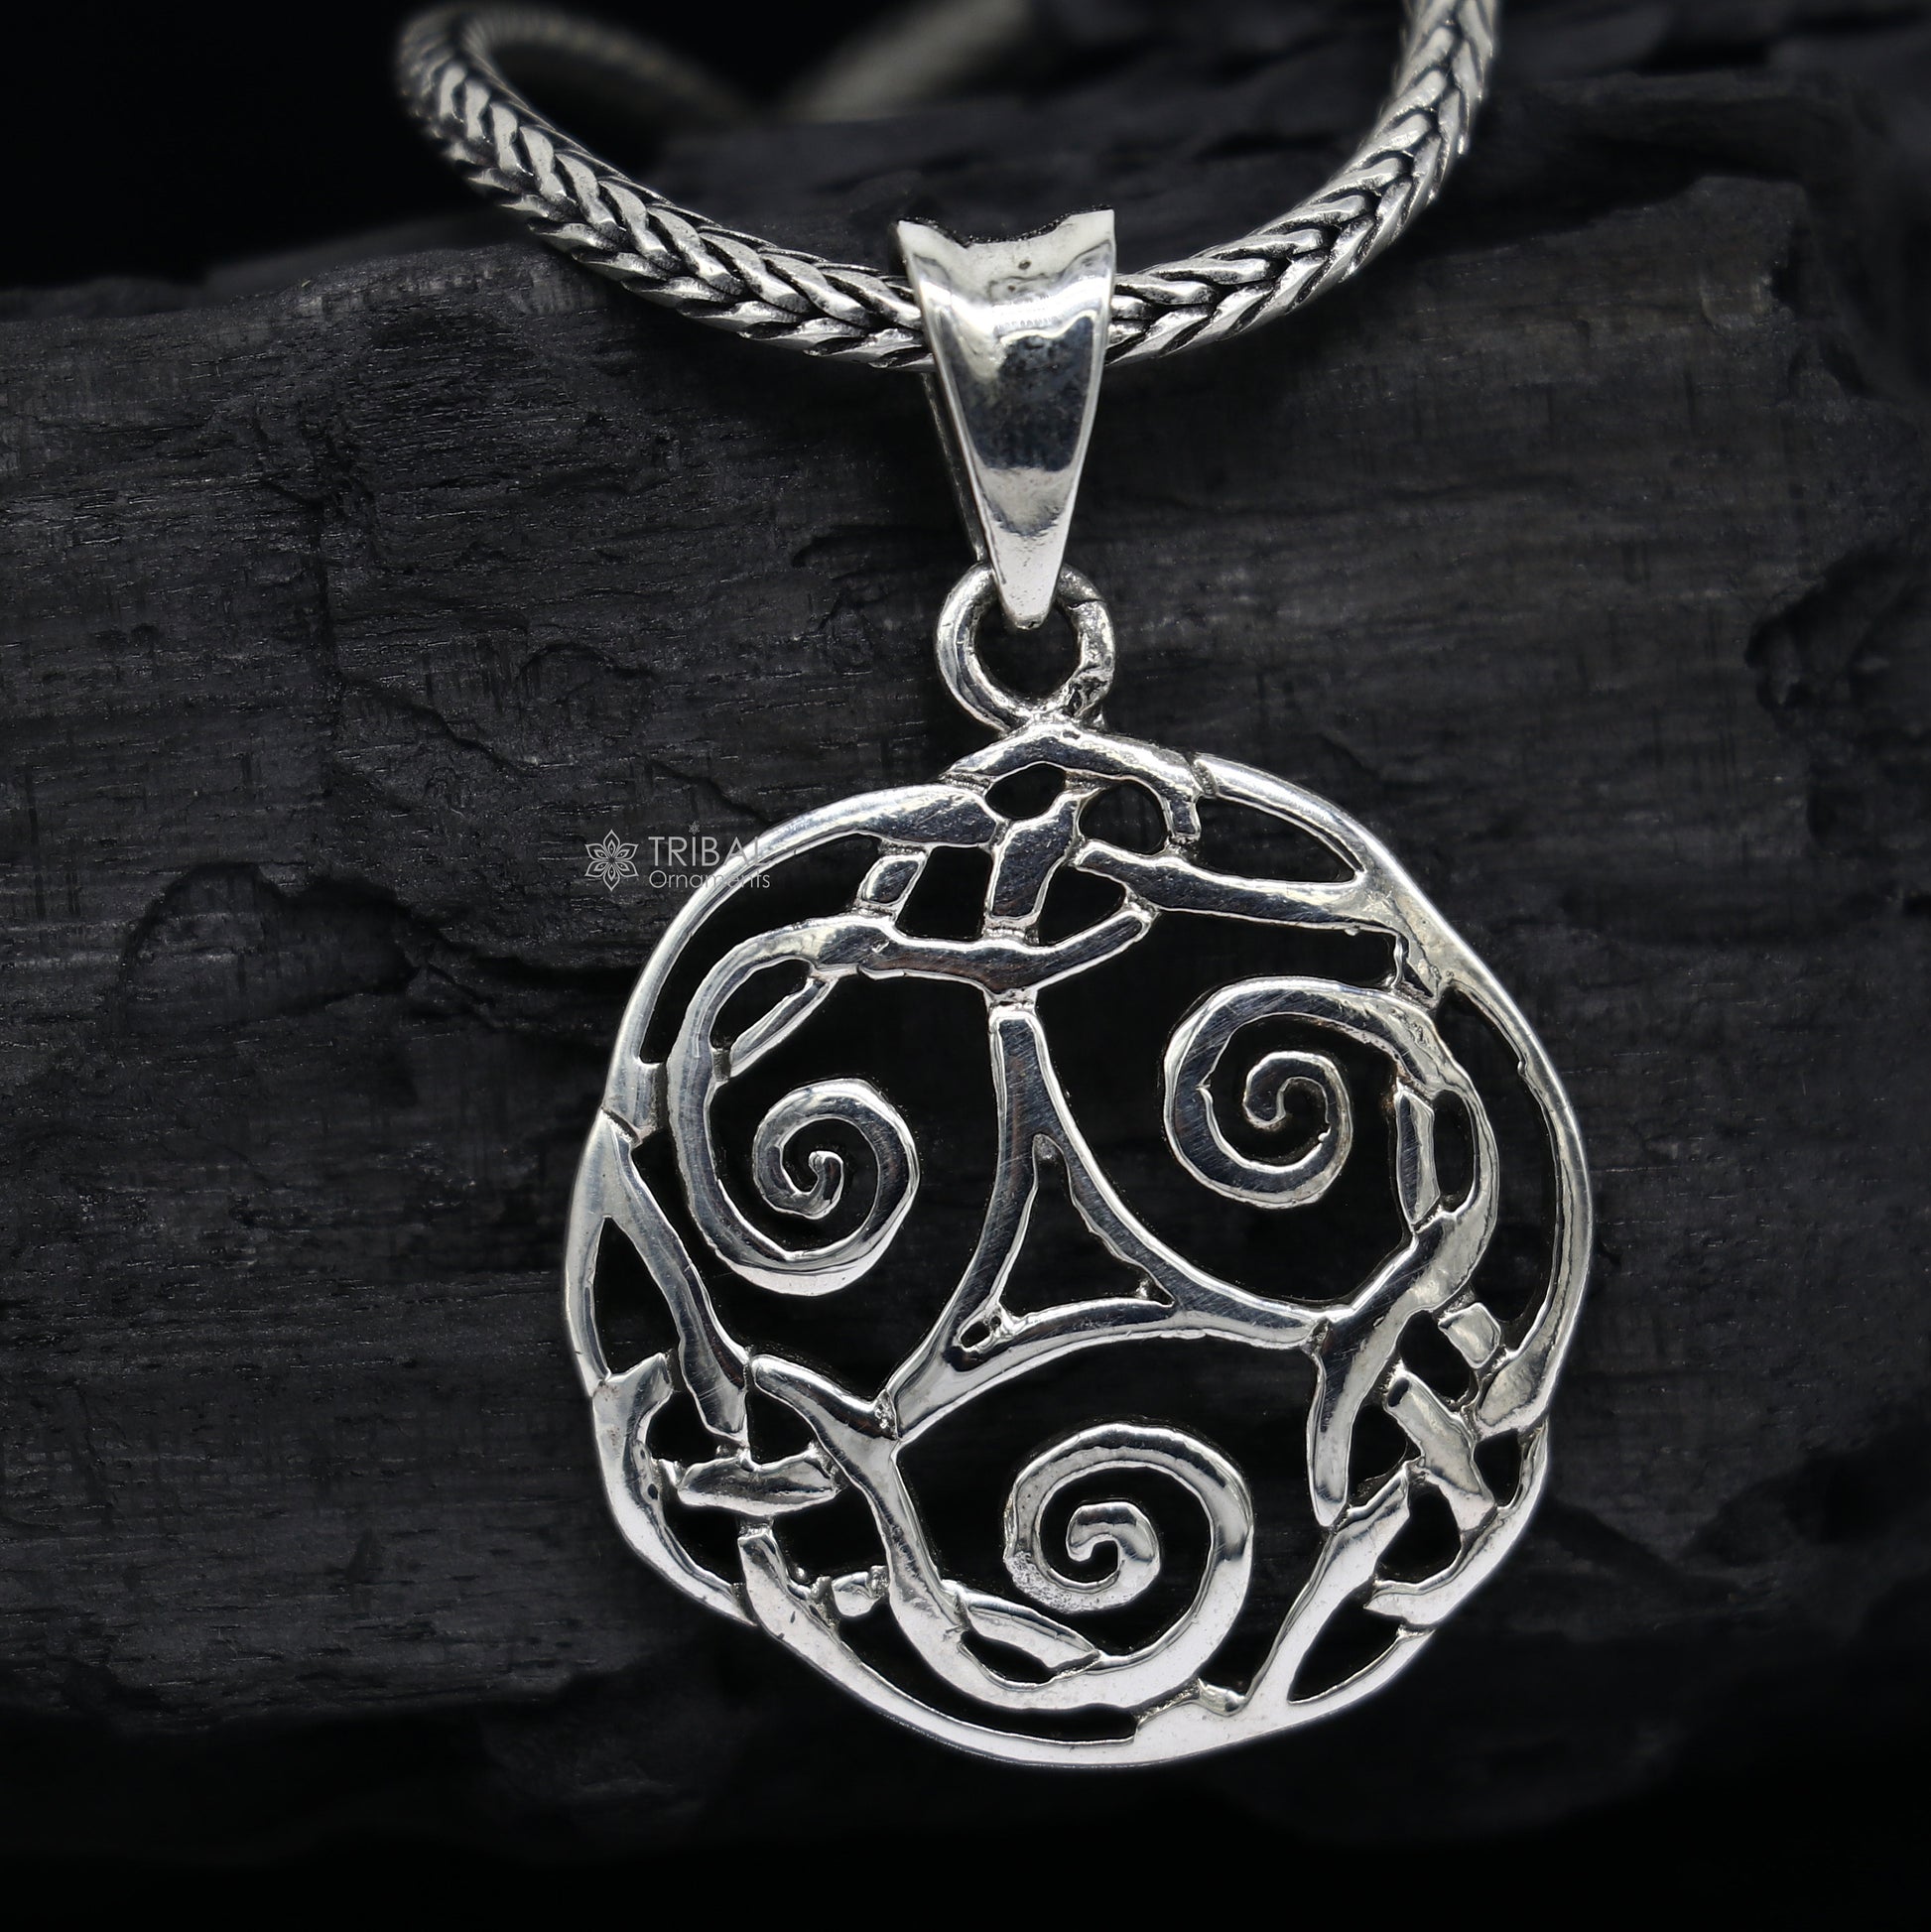 925 sterling silver Triskelion CELTIC pendant, excellent high quality pendant silver necklace locket nsp708 - TRIBAL ORNAMENTS